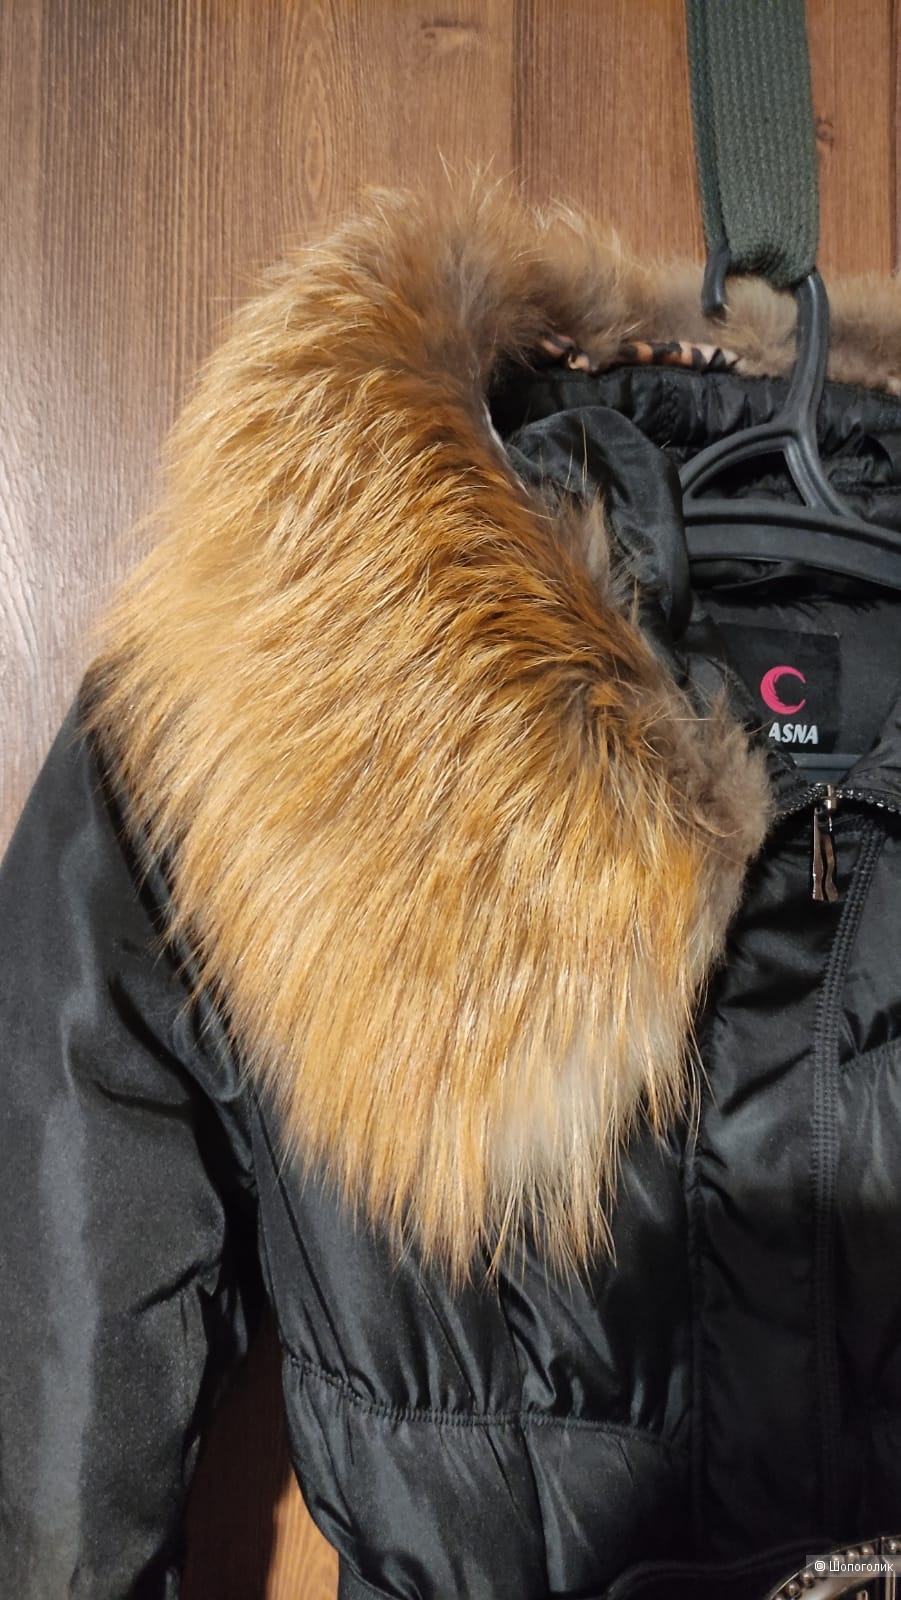 Пальто - пуховик от бренда Clasna , 42-44 размер